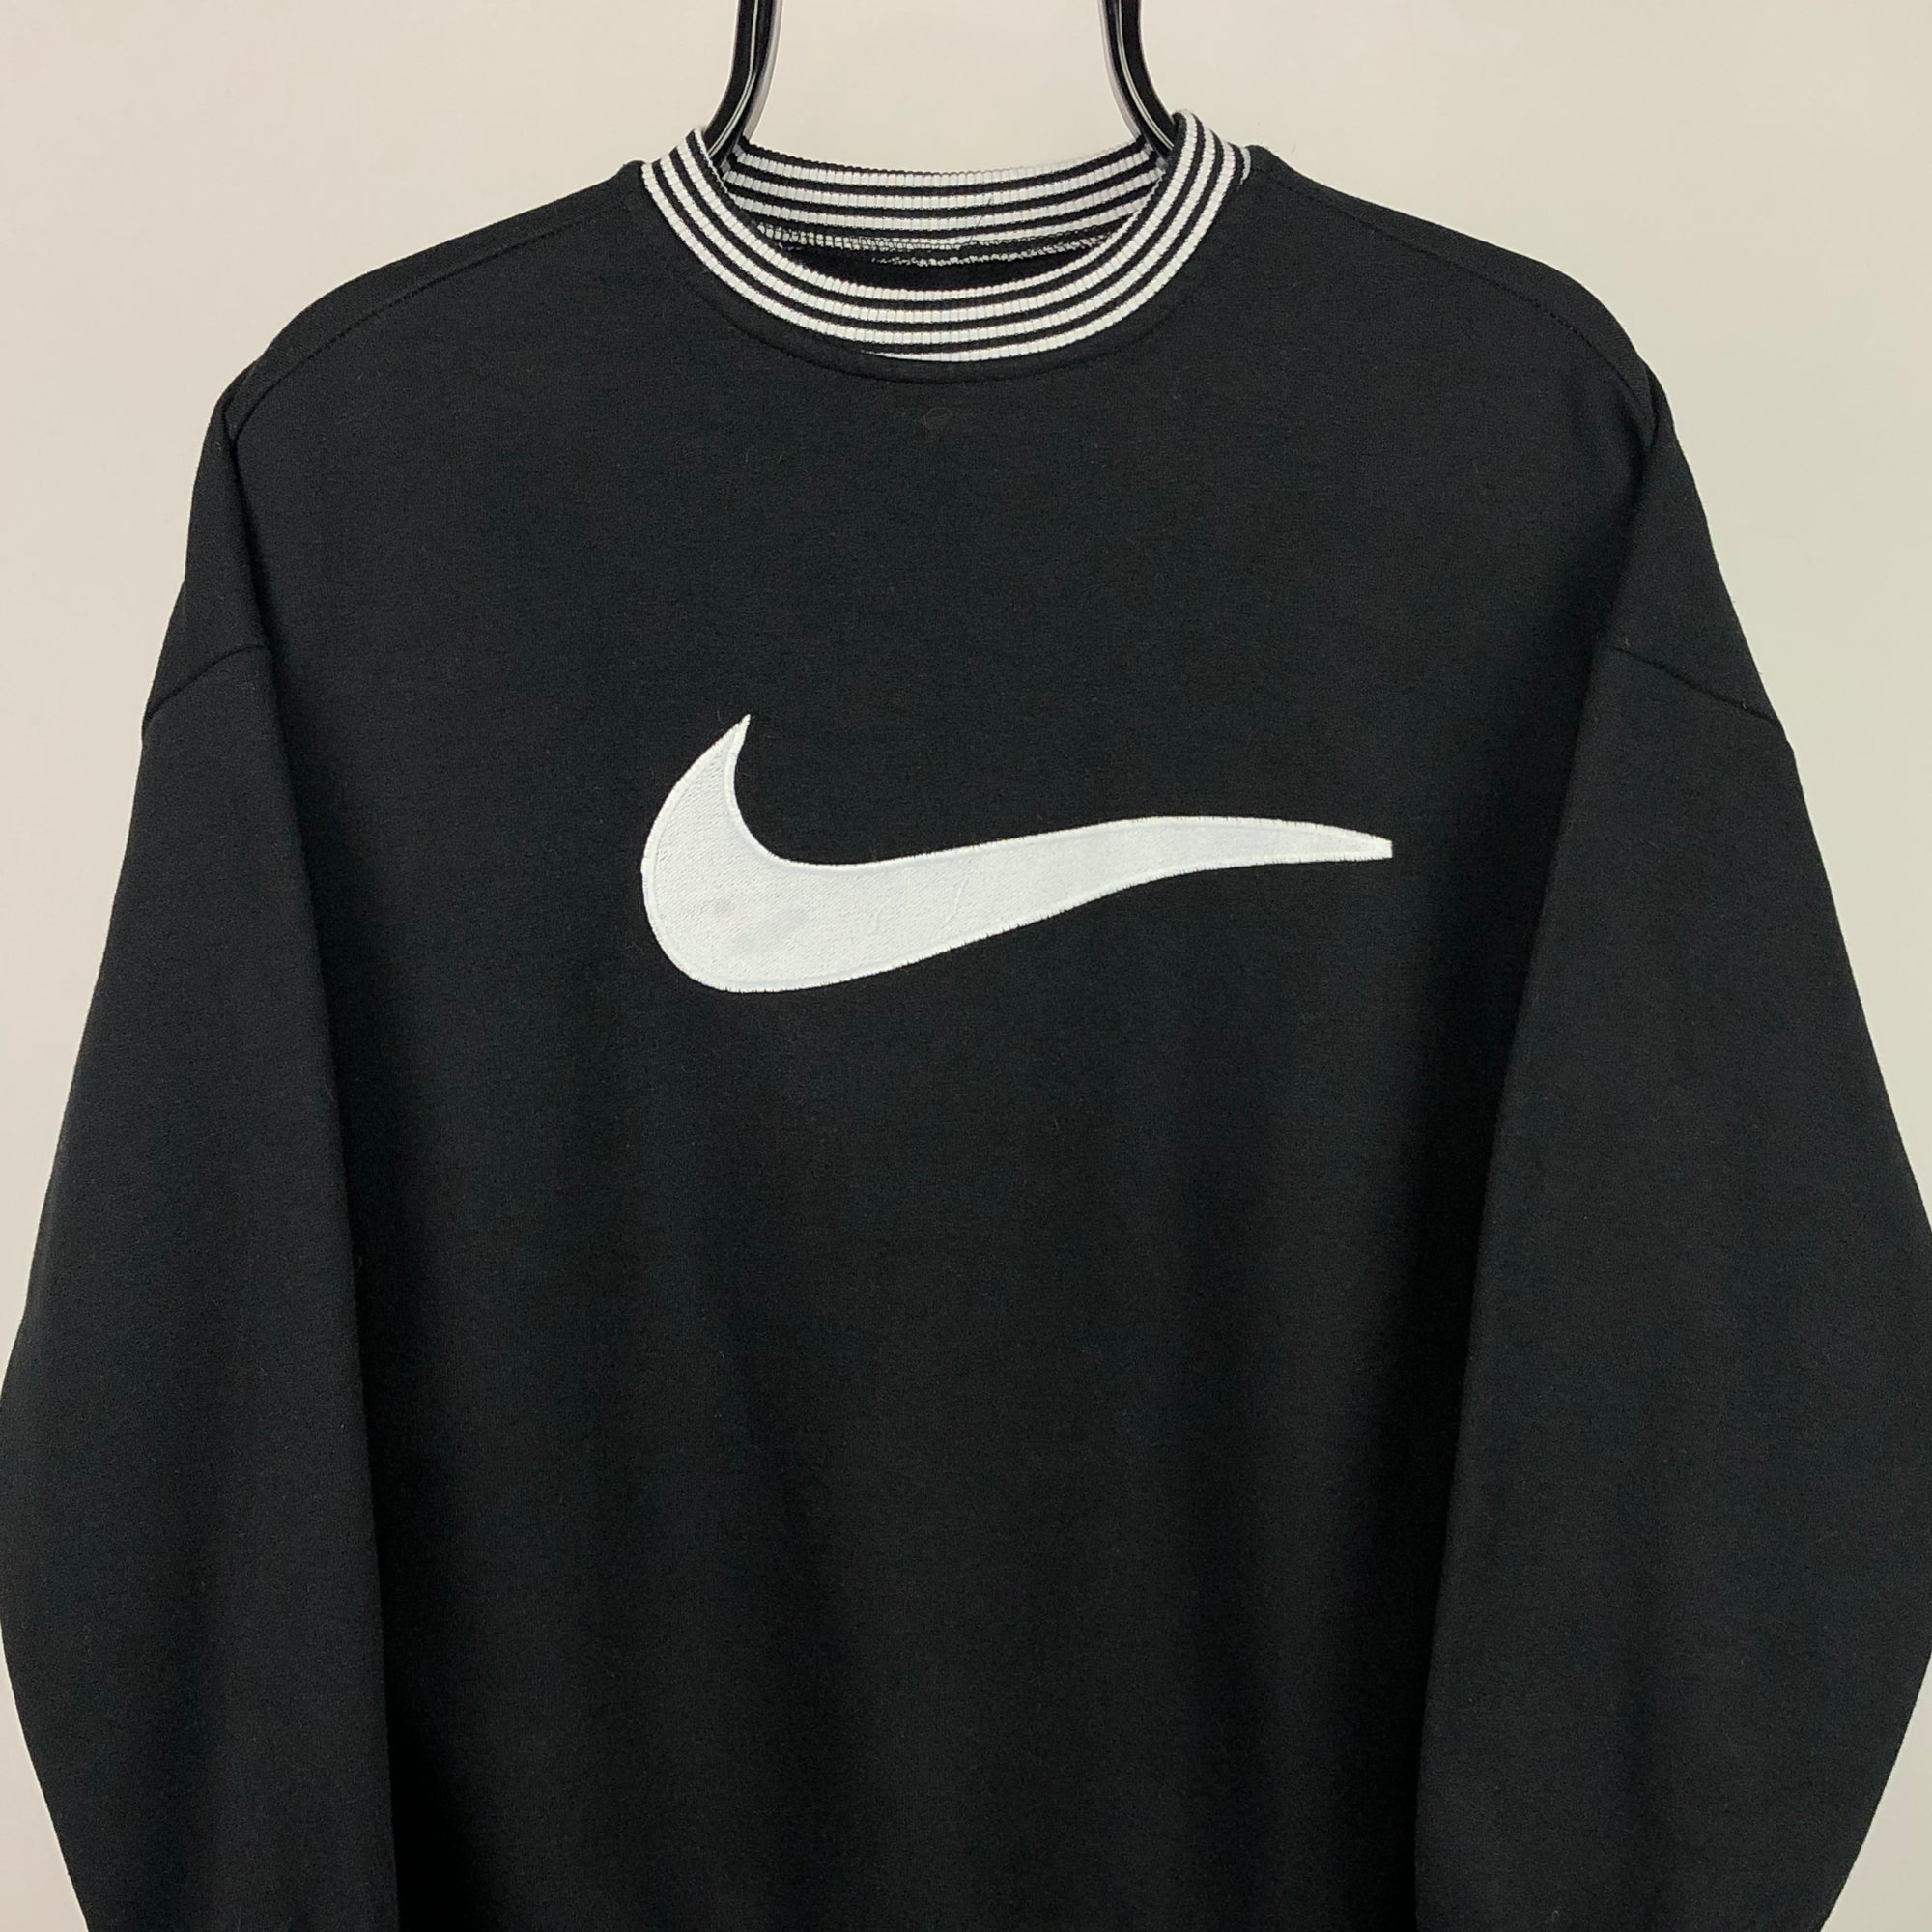 Vintage Nike Embroidered Big Swoosh Sweatshirt - Men's Medium/Women's Large